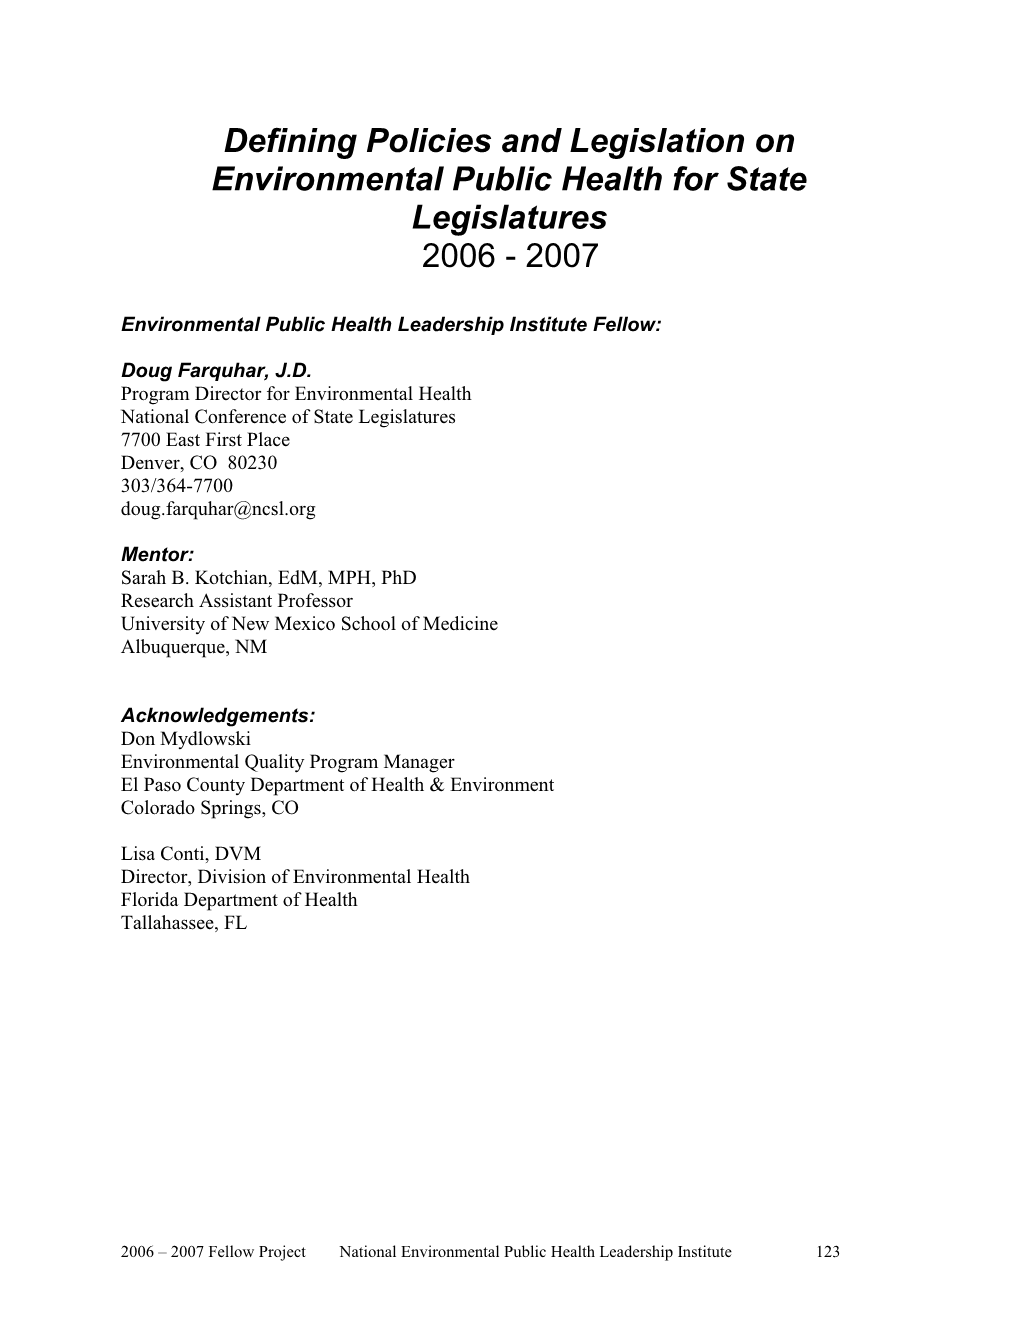 Defining Policies and Legislation on Environmental Public Health for State Legislatures